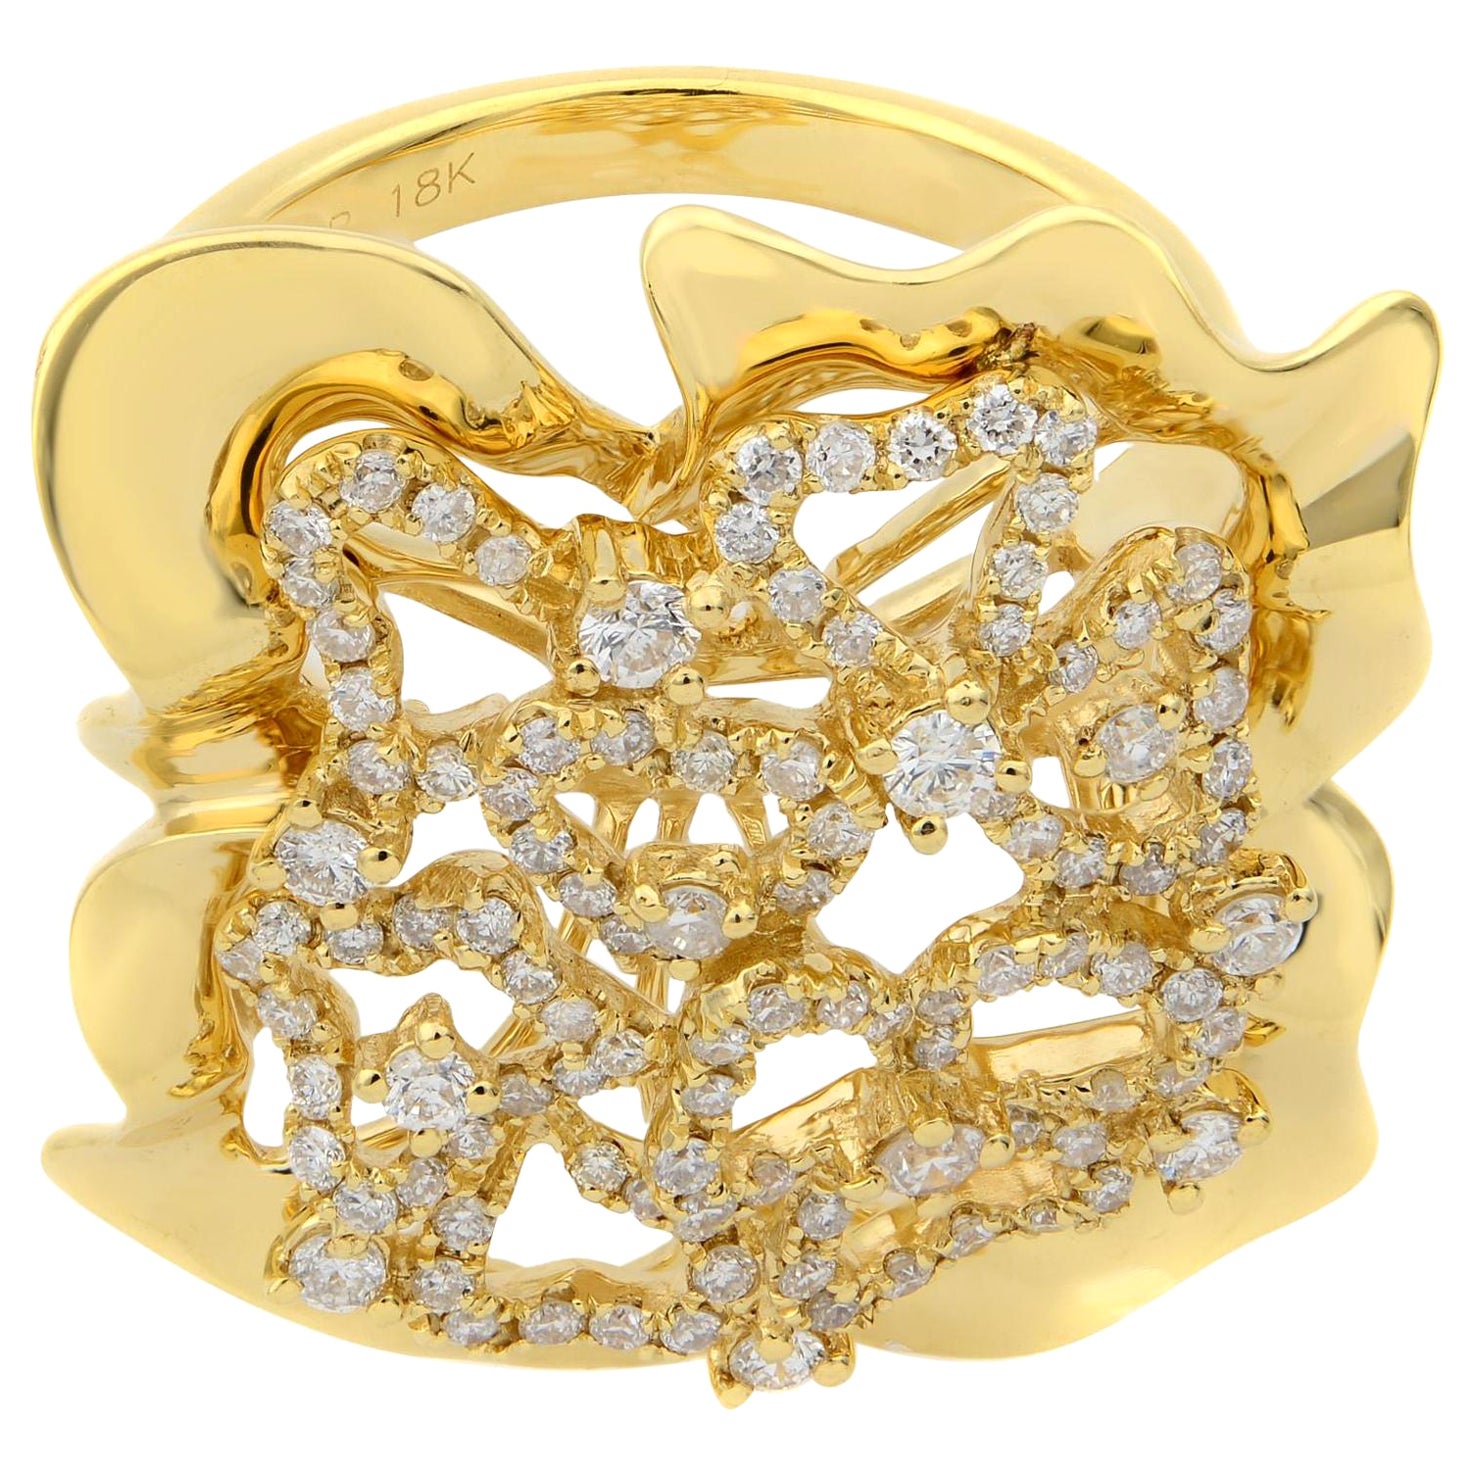 Rachel Koen Large Floral Diamond Cocktail Ring 18K Yellow Gold 0.75cttw For Sale